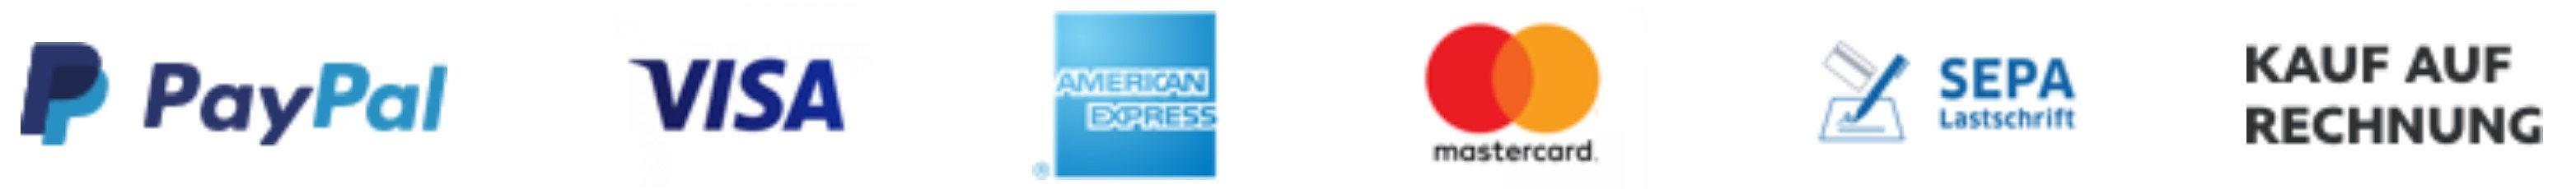 PayPal_vier_Zahlarten_logo